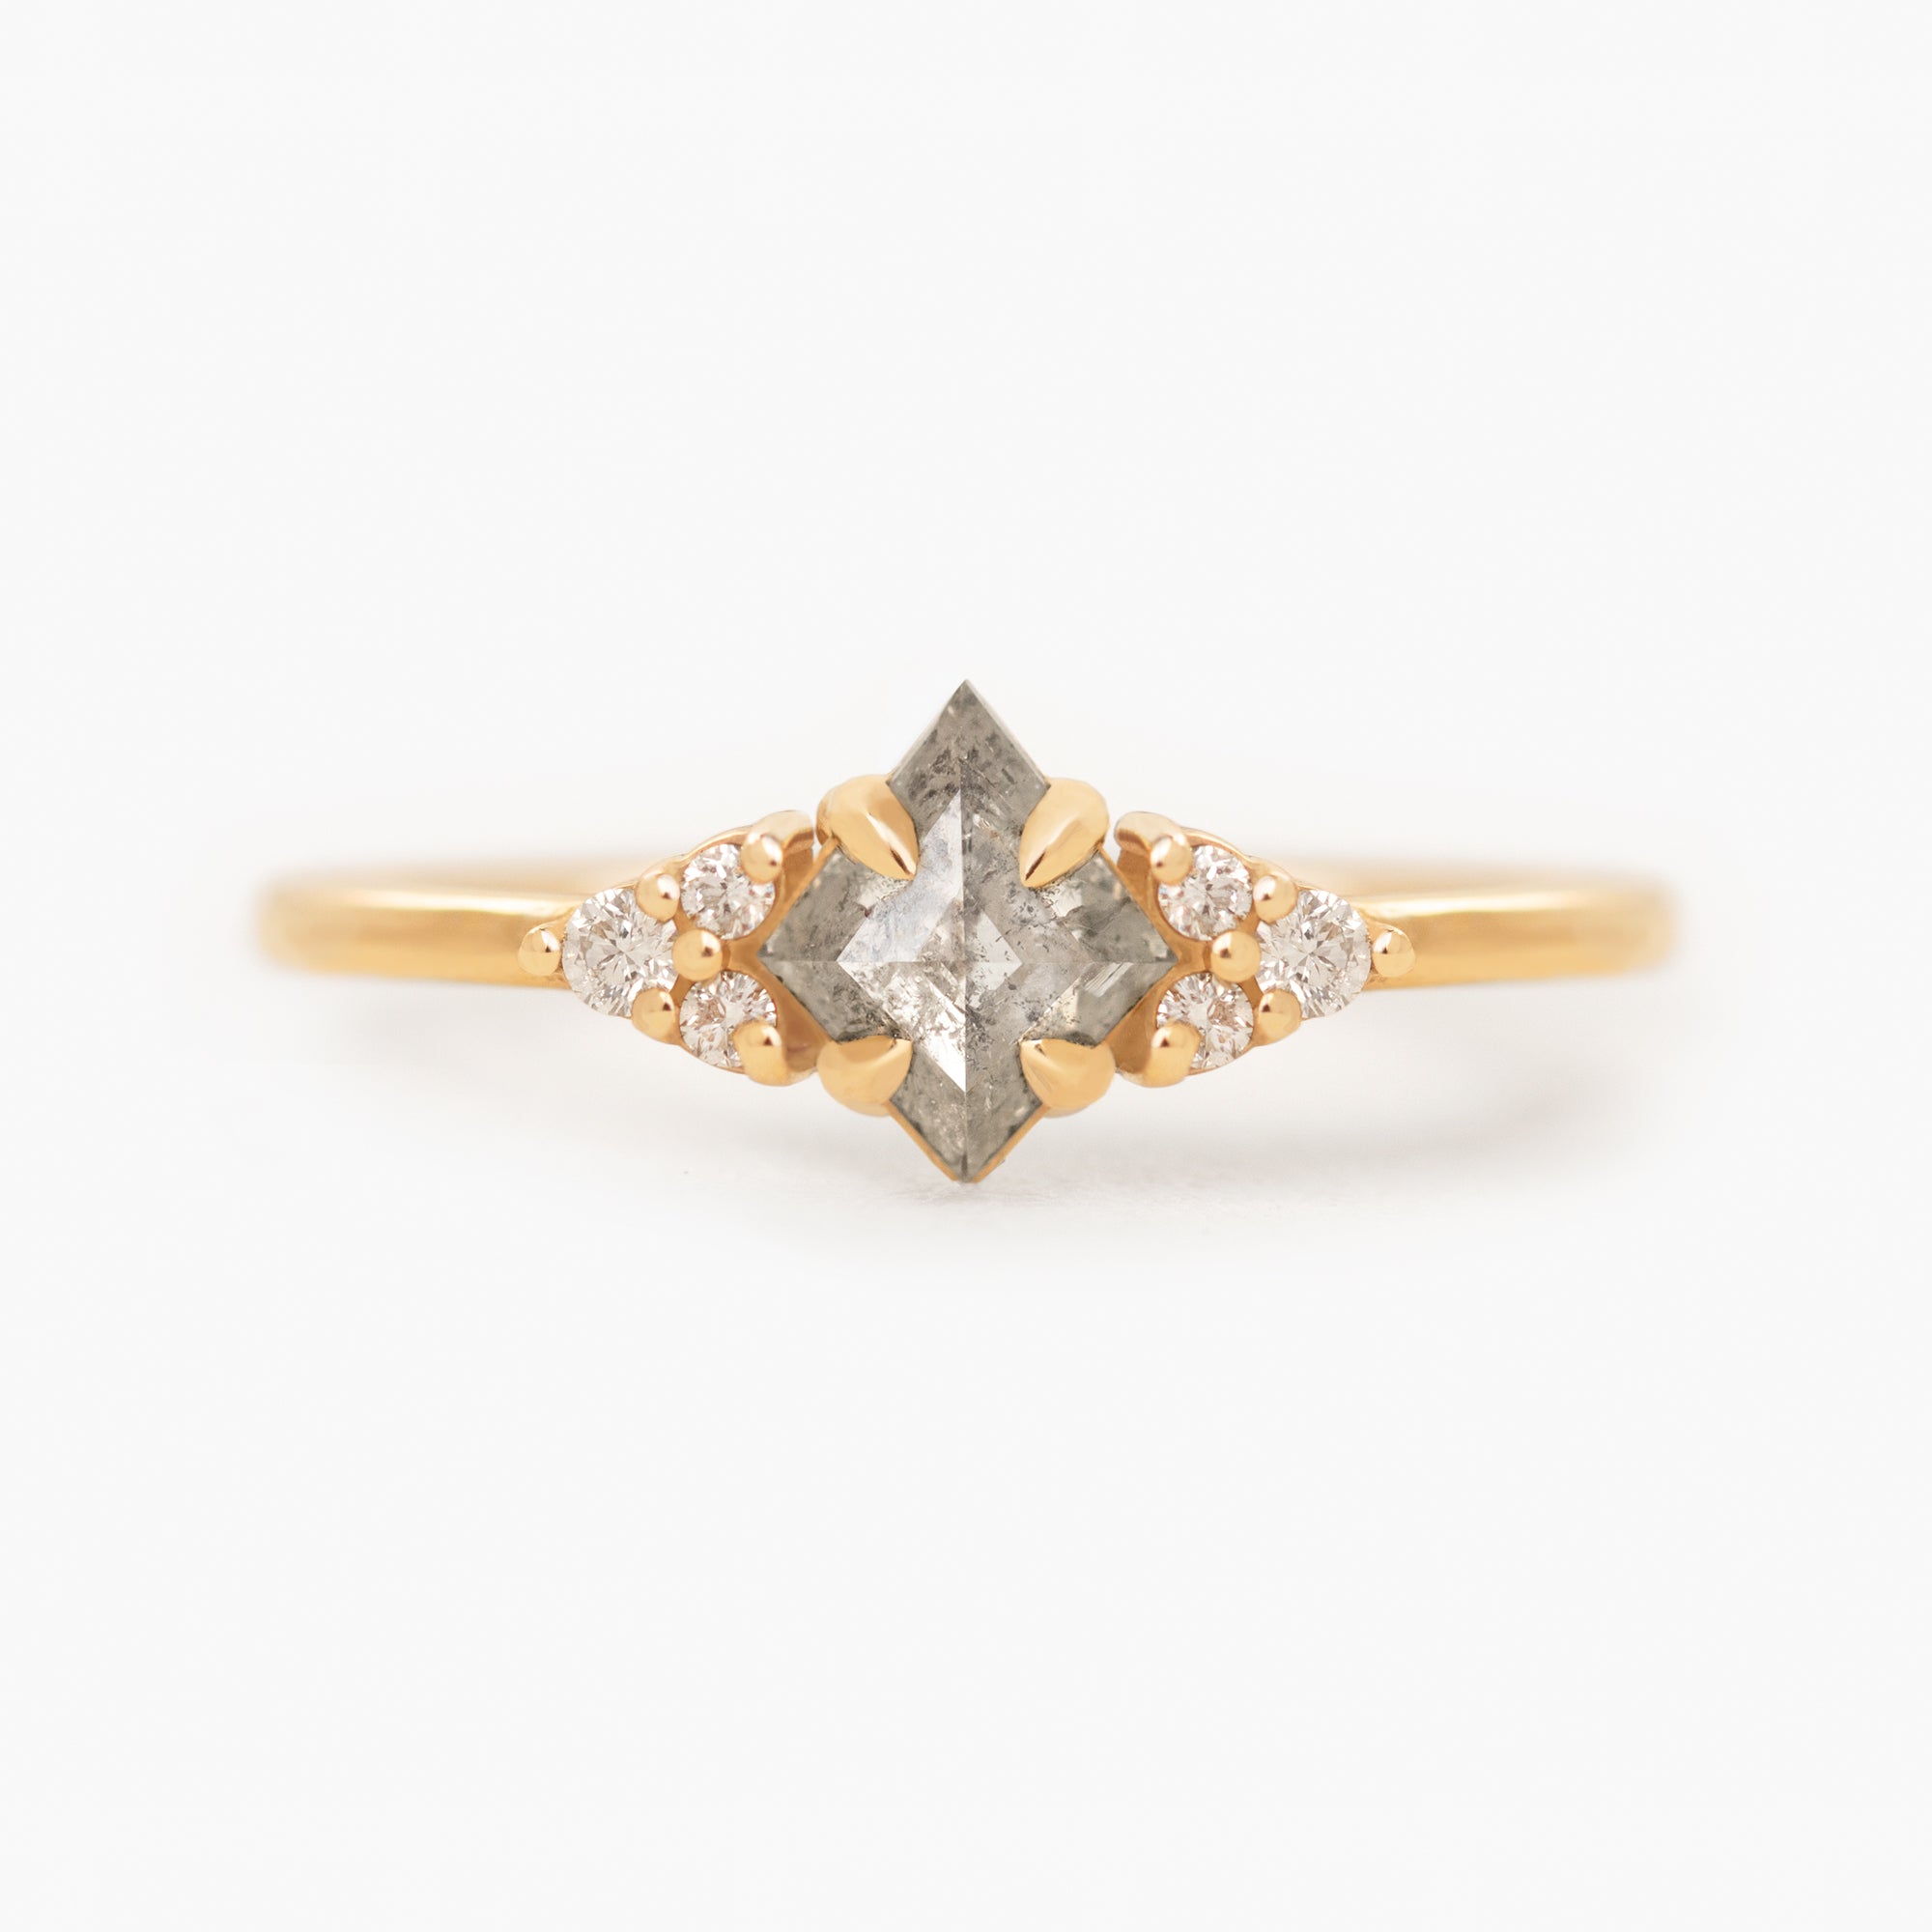 Jamie Park Jewelry - 0.68 tcw. Kite Cut Salt and Pepper Diamond Ring